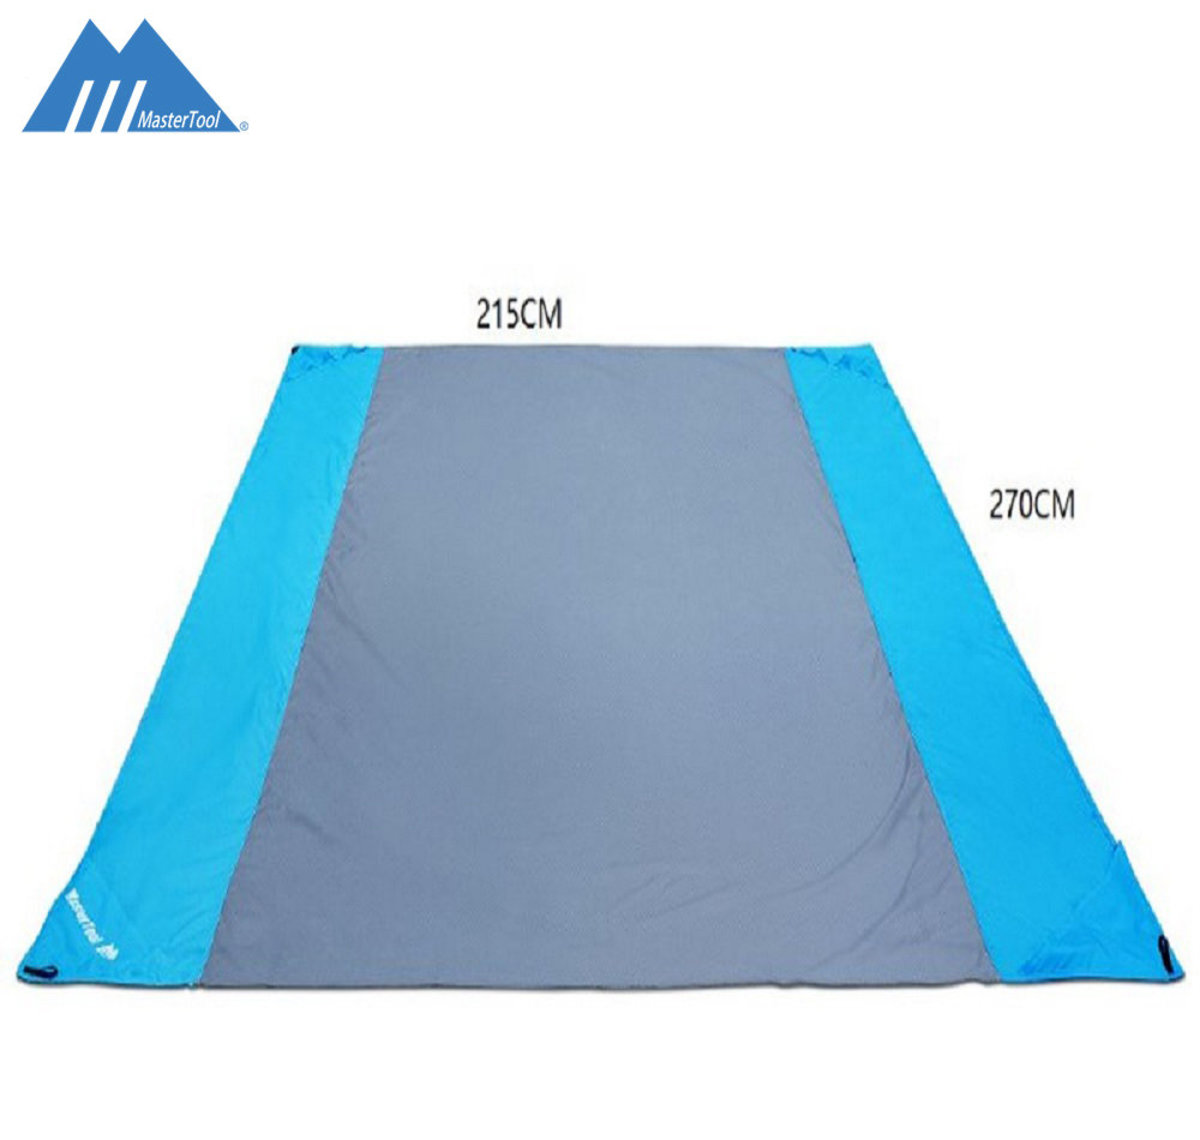 MasterTool - Extra Large Picnic Beach Blanket, picnic mat, XL Size